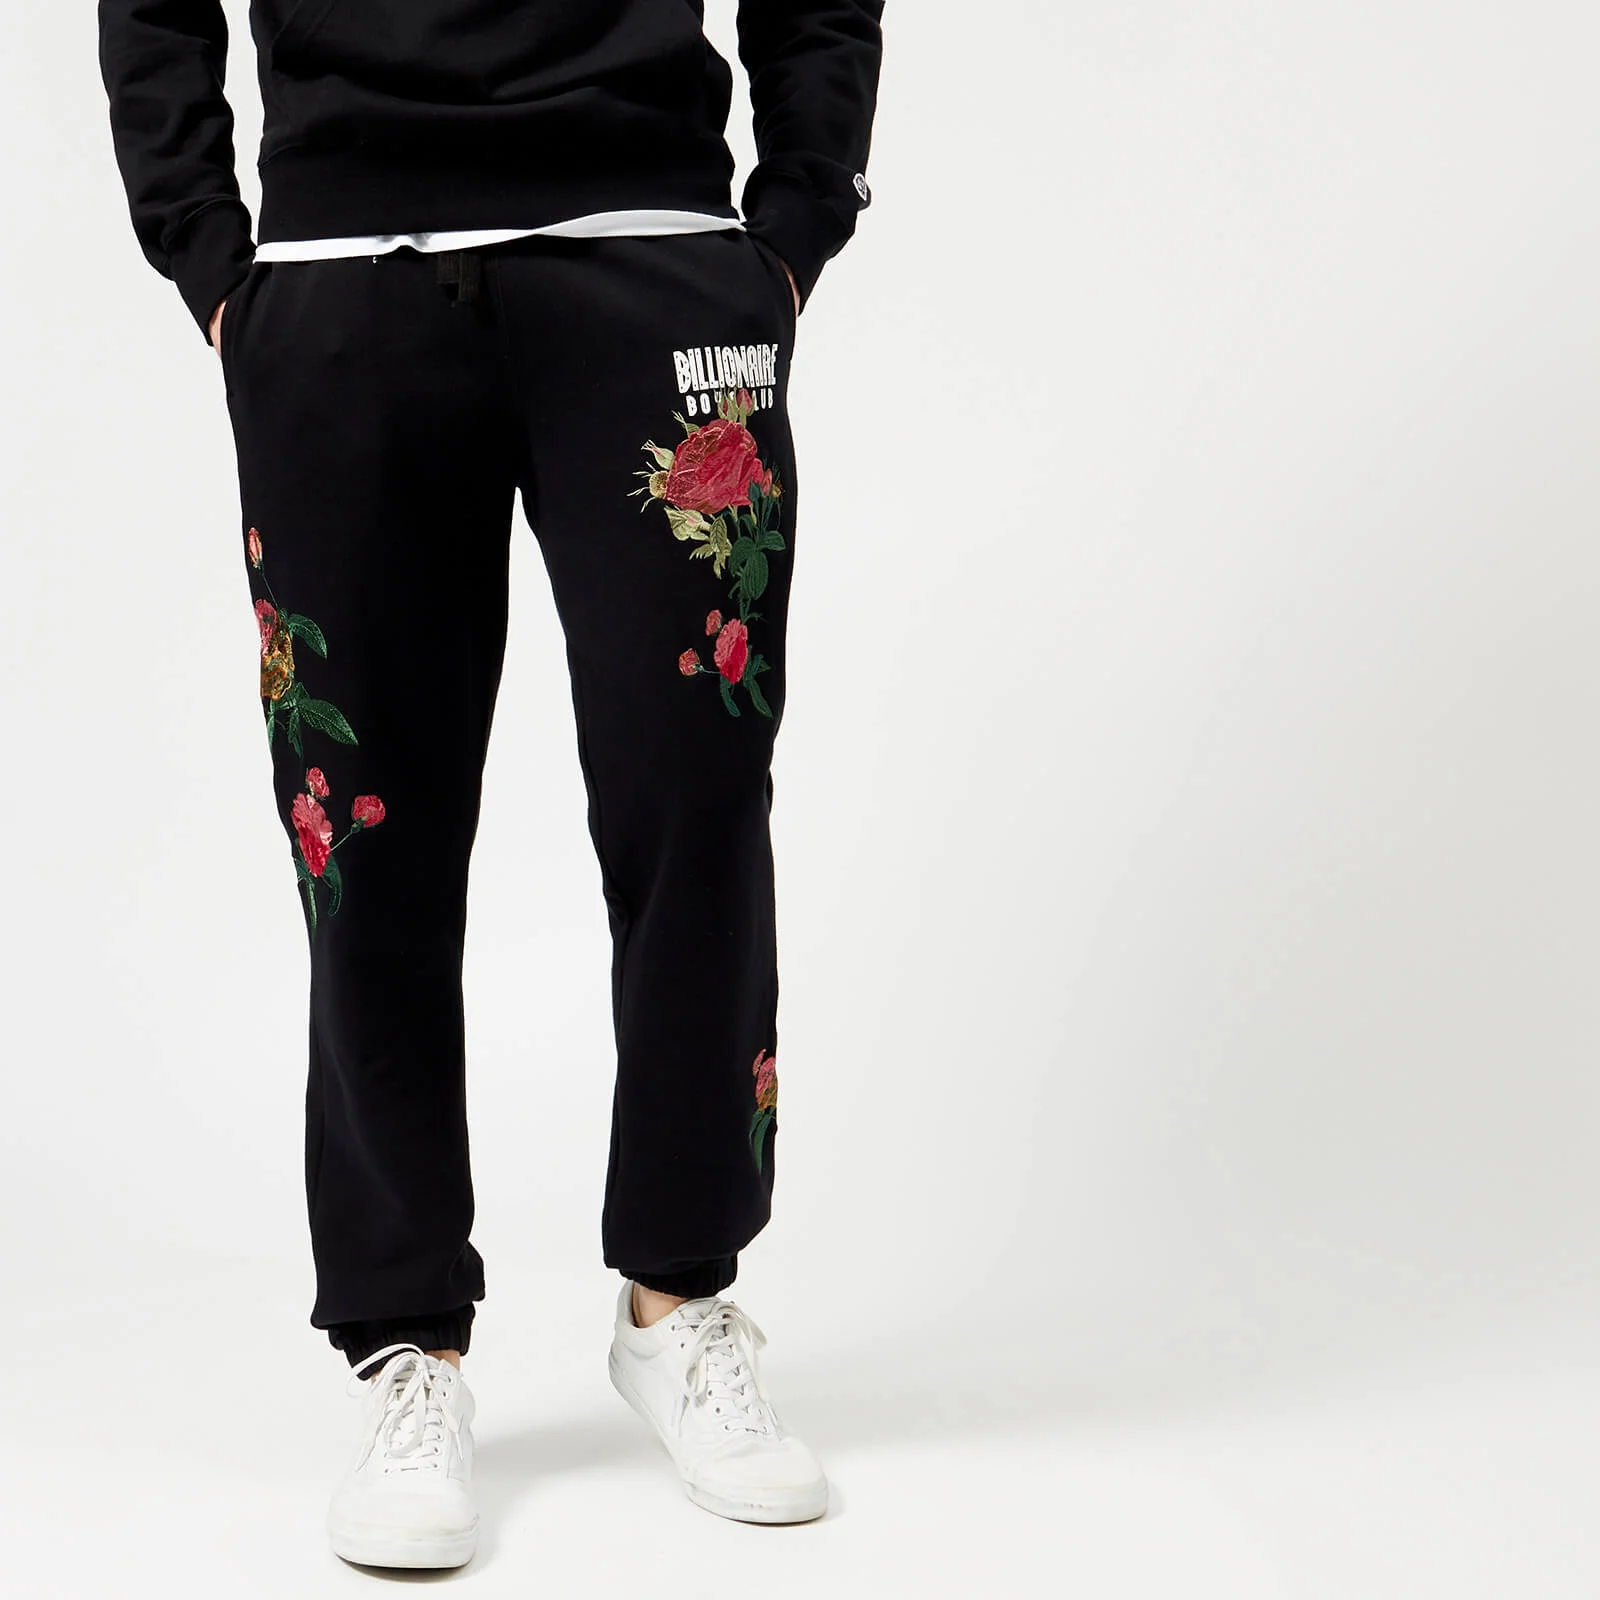 Billionaire Boys Club Men's Embroidered Floral Sweatpants - Black Image 1